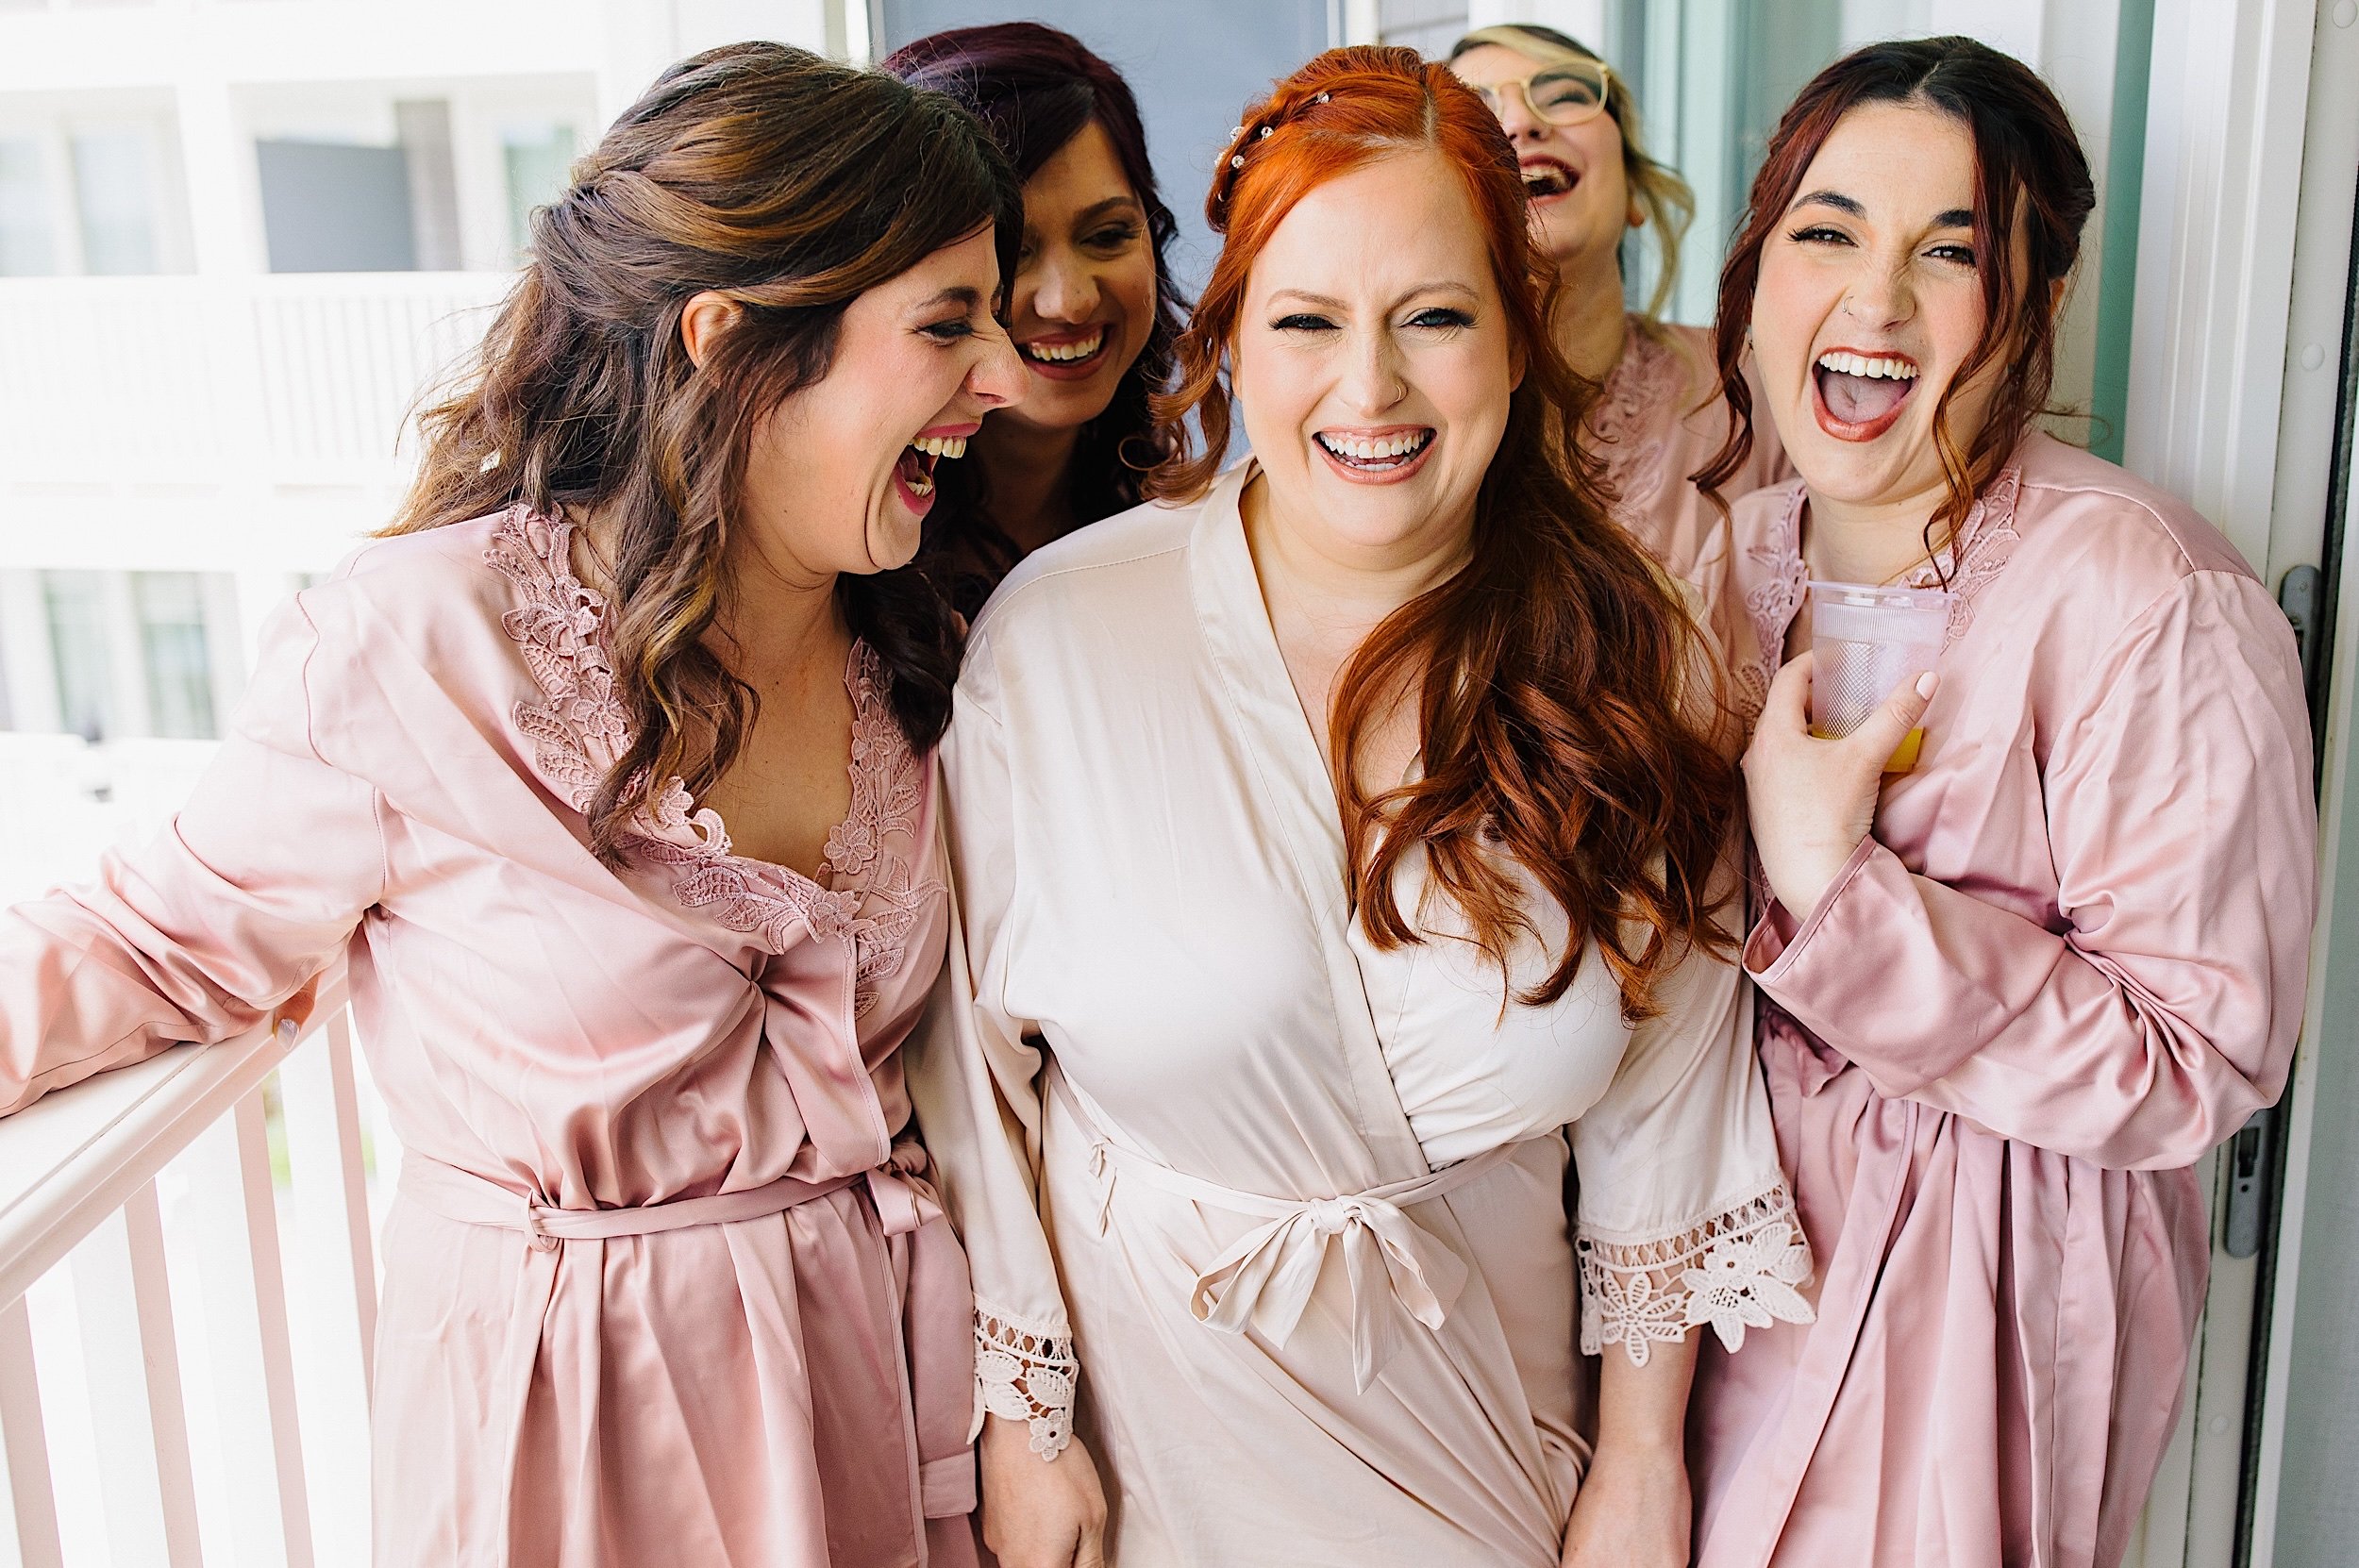 013-Florida-bride-laughing-with-bridesmaids.jpg